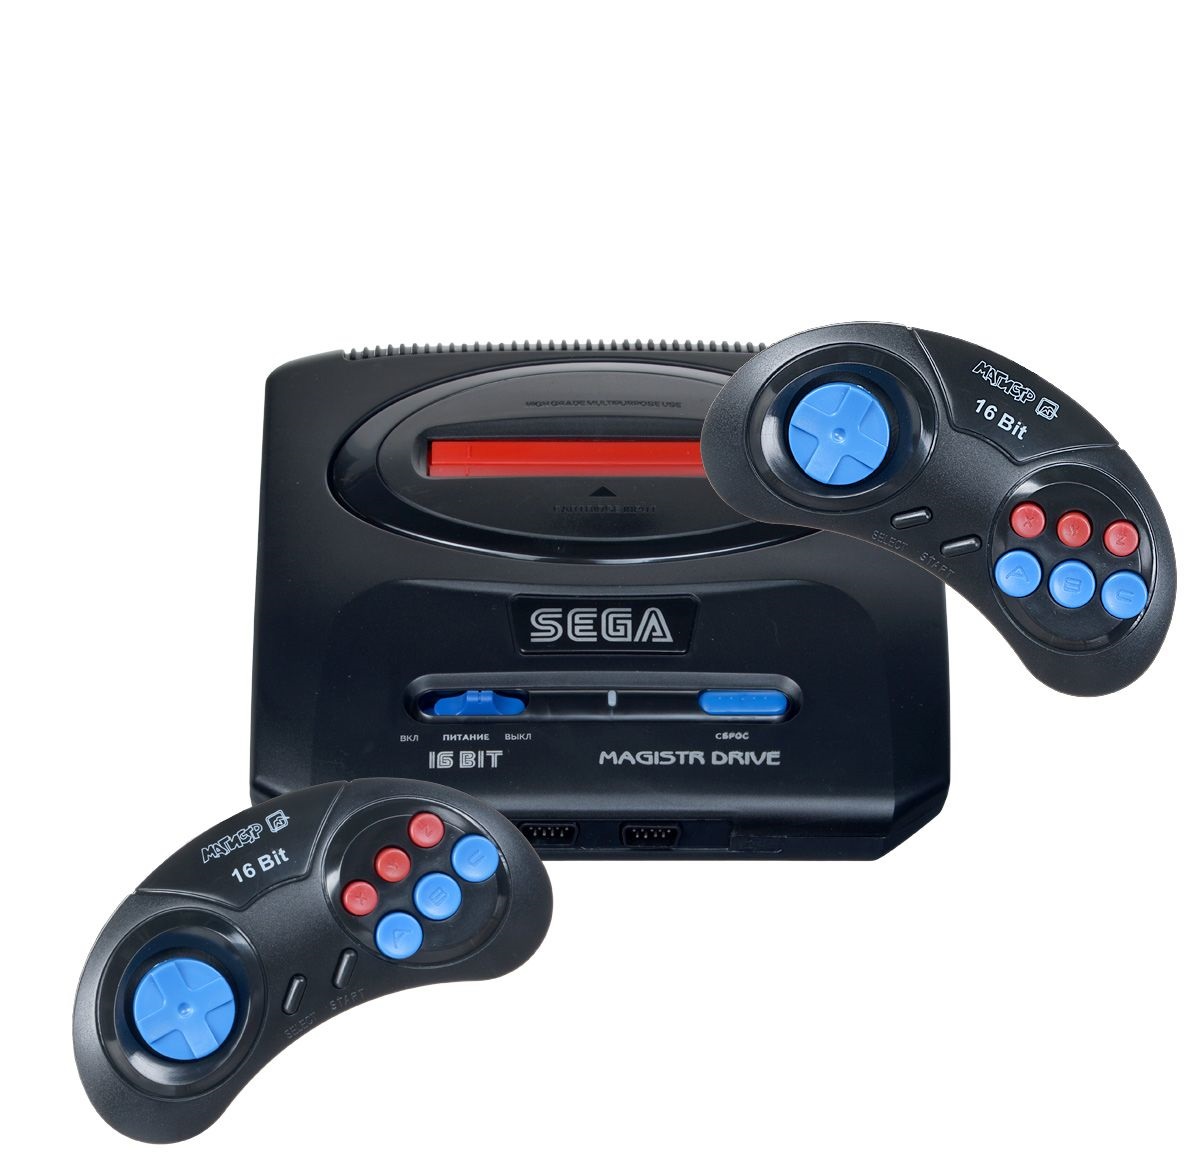 Приставки купить в пензе. Приставка Sega Mega Drive Magistr 2. Игровая приставка Sega Magistr Drive 2. Приставка сега Магистр драйв 2. Sega Magistr Drive 5.